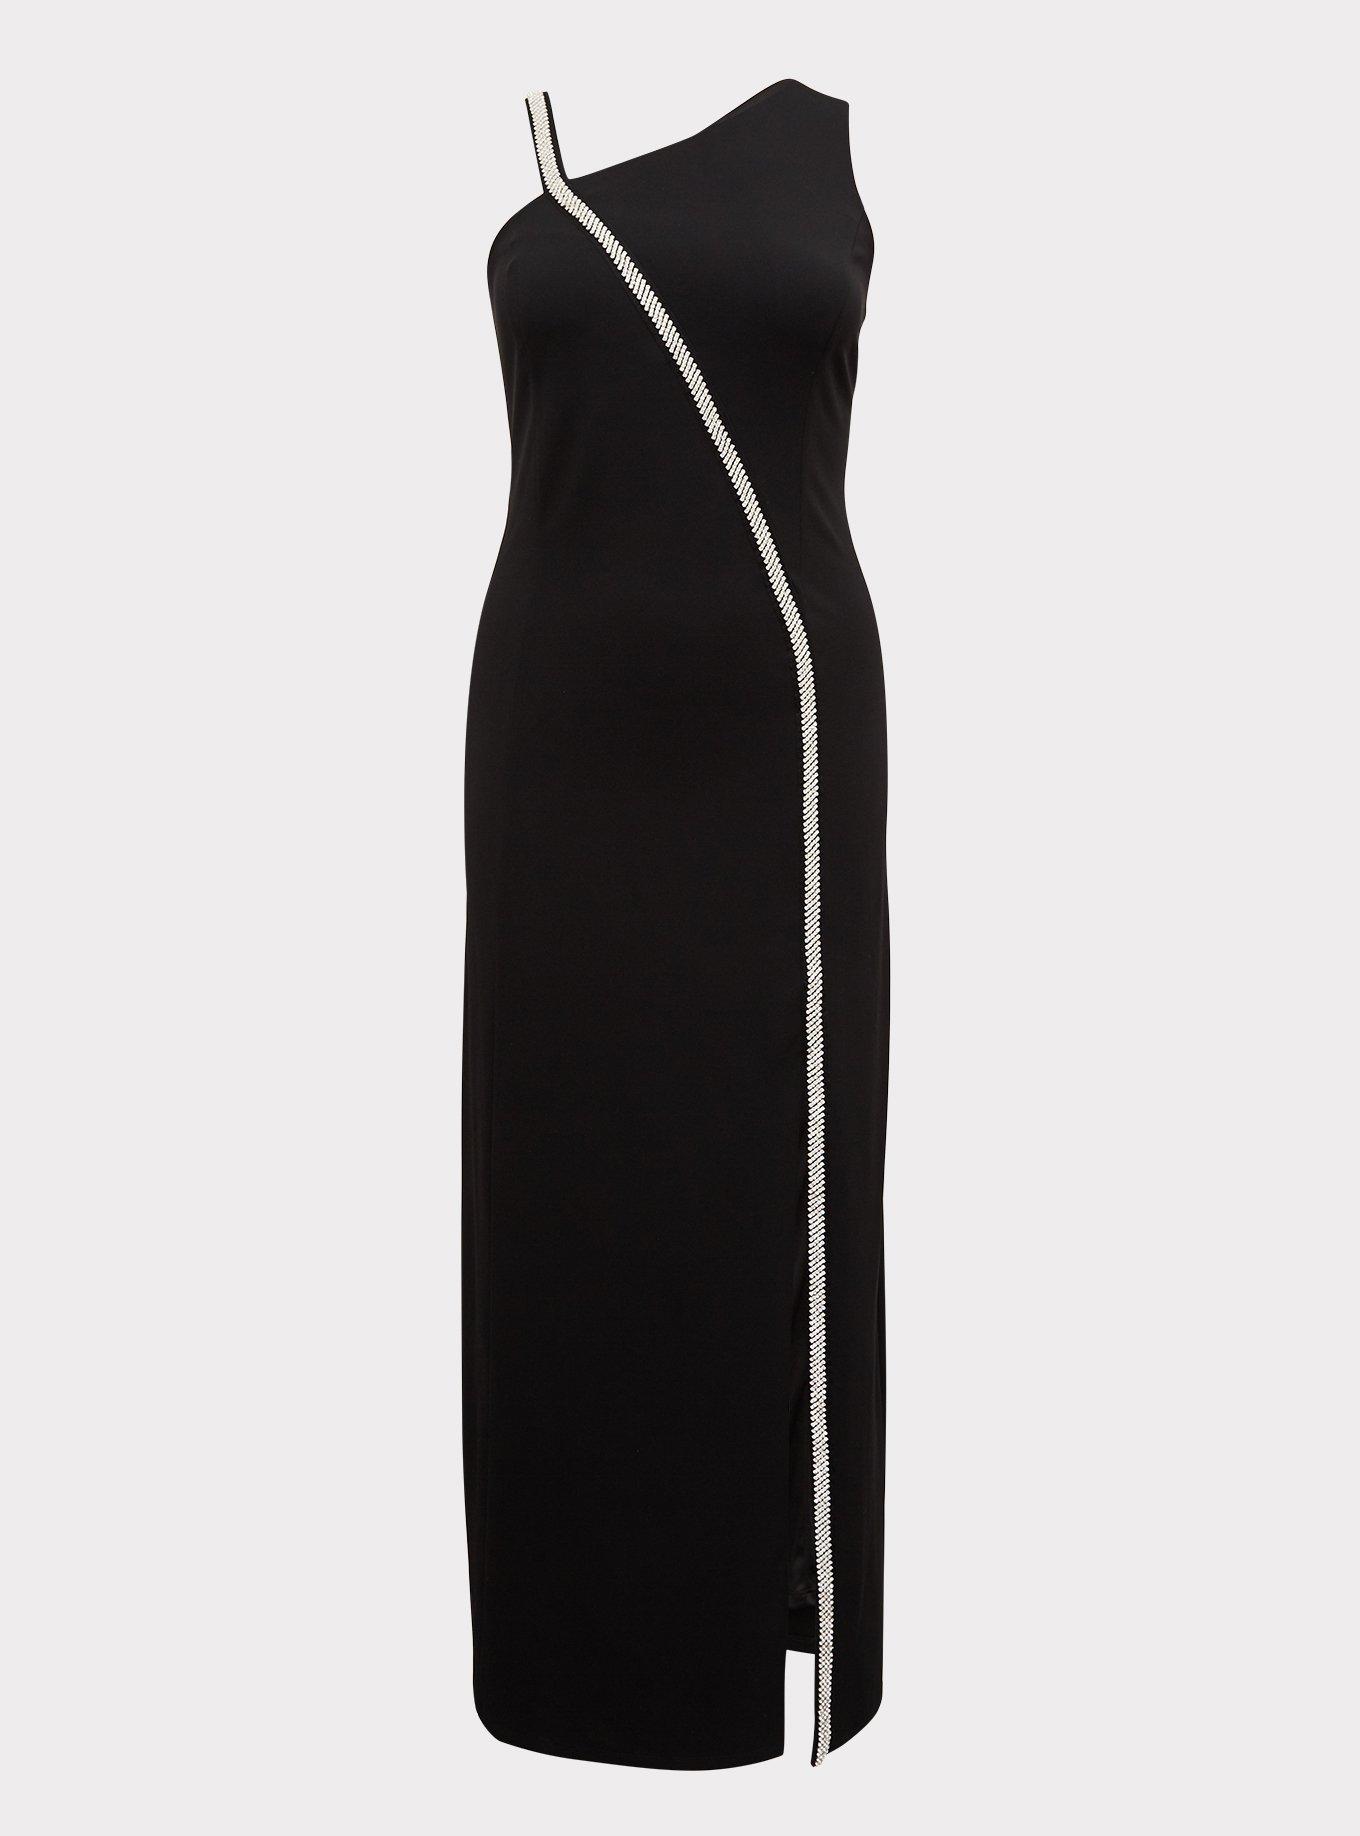 Plus Size - Special Occasion Black Crepe Rhinestone Slit Gown - Torrid